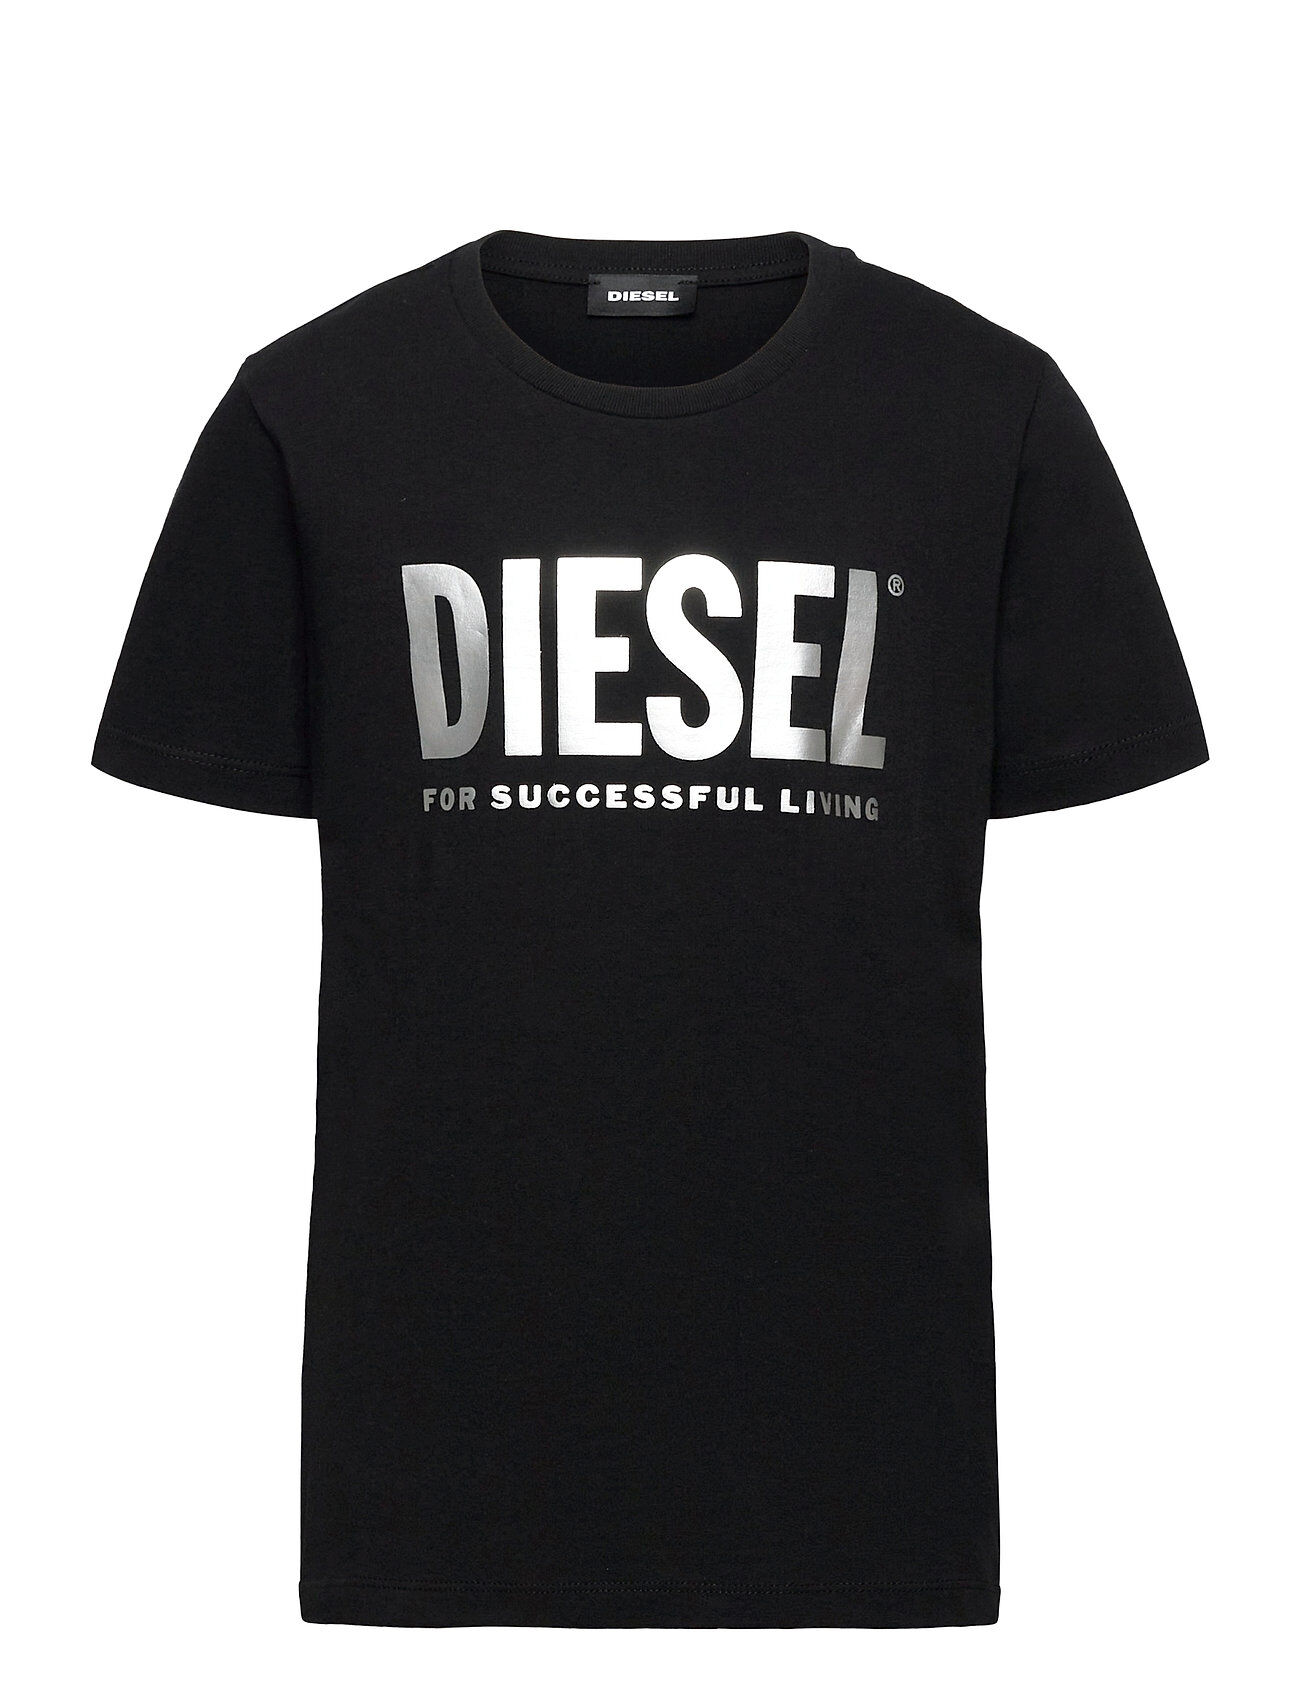 Diesel Tsilywx T-Shirt T-shirts Short-sleeved Svart Diesel